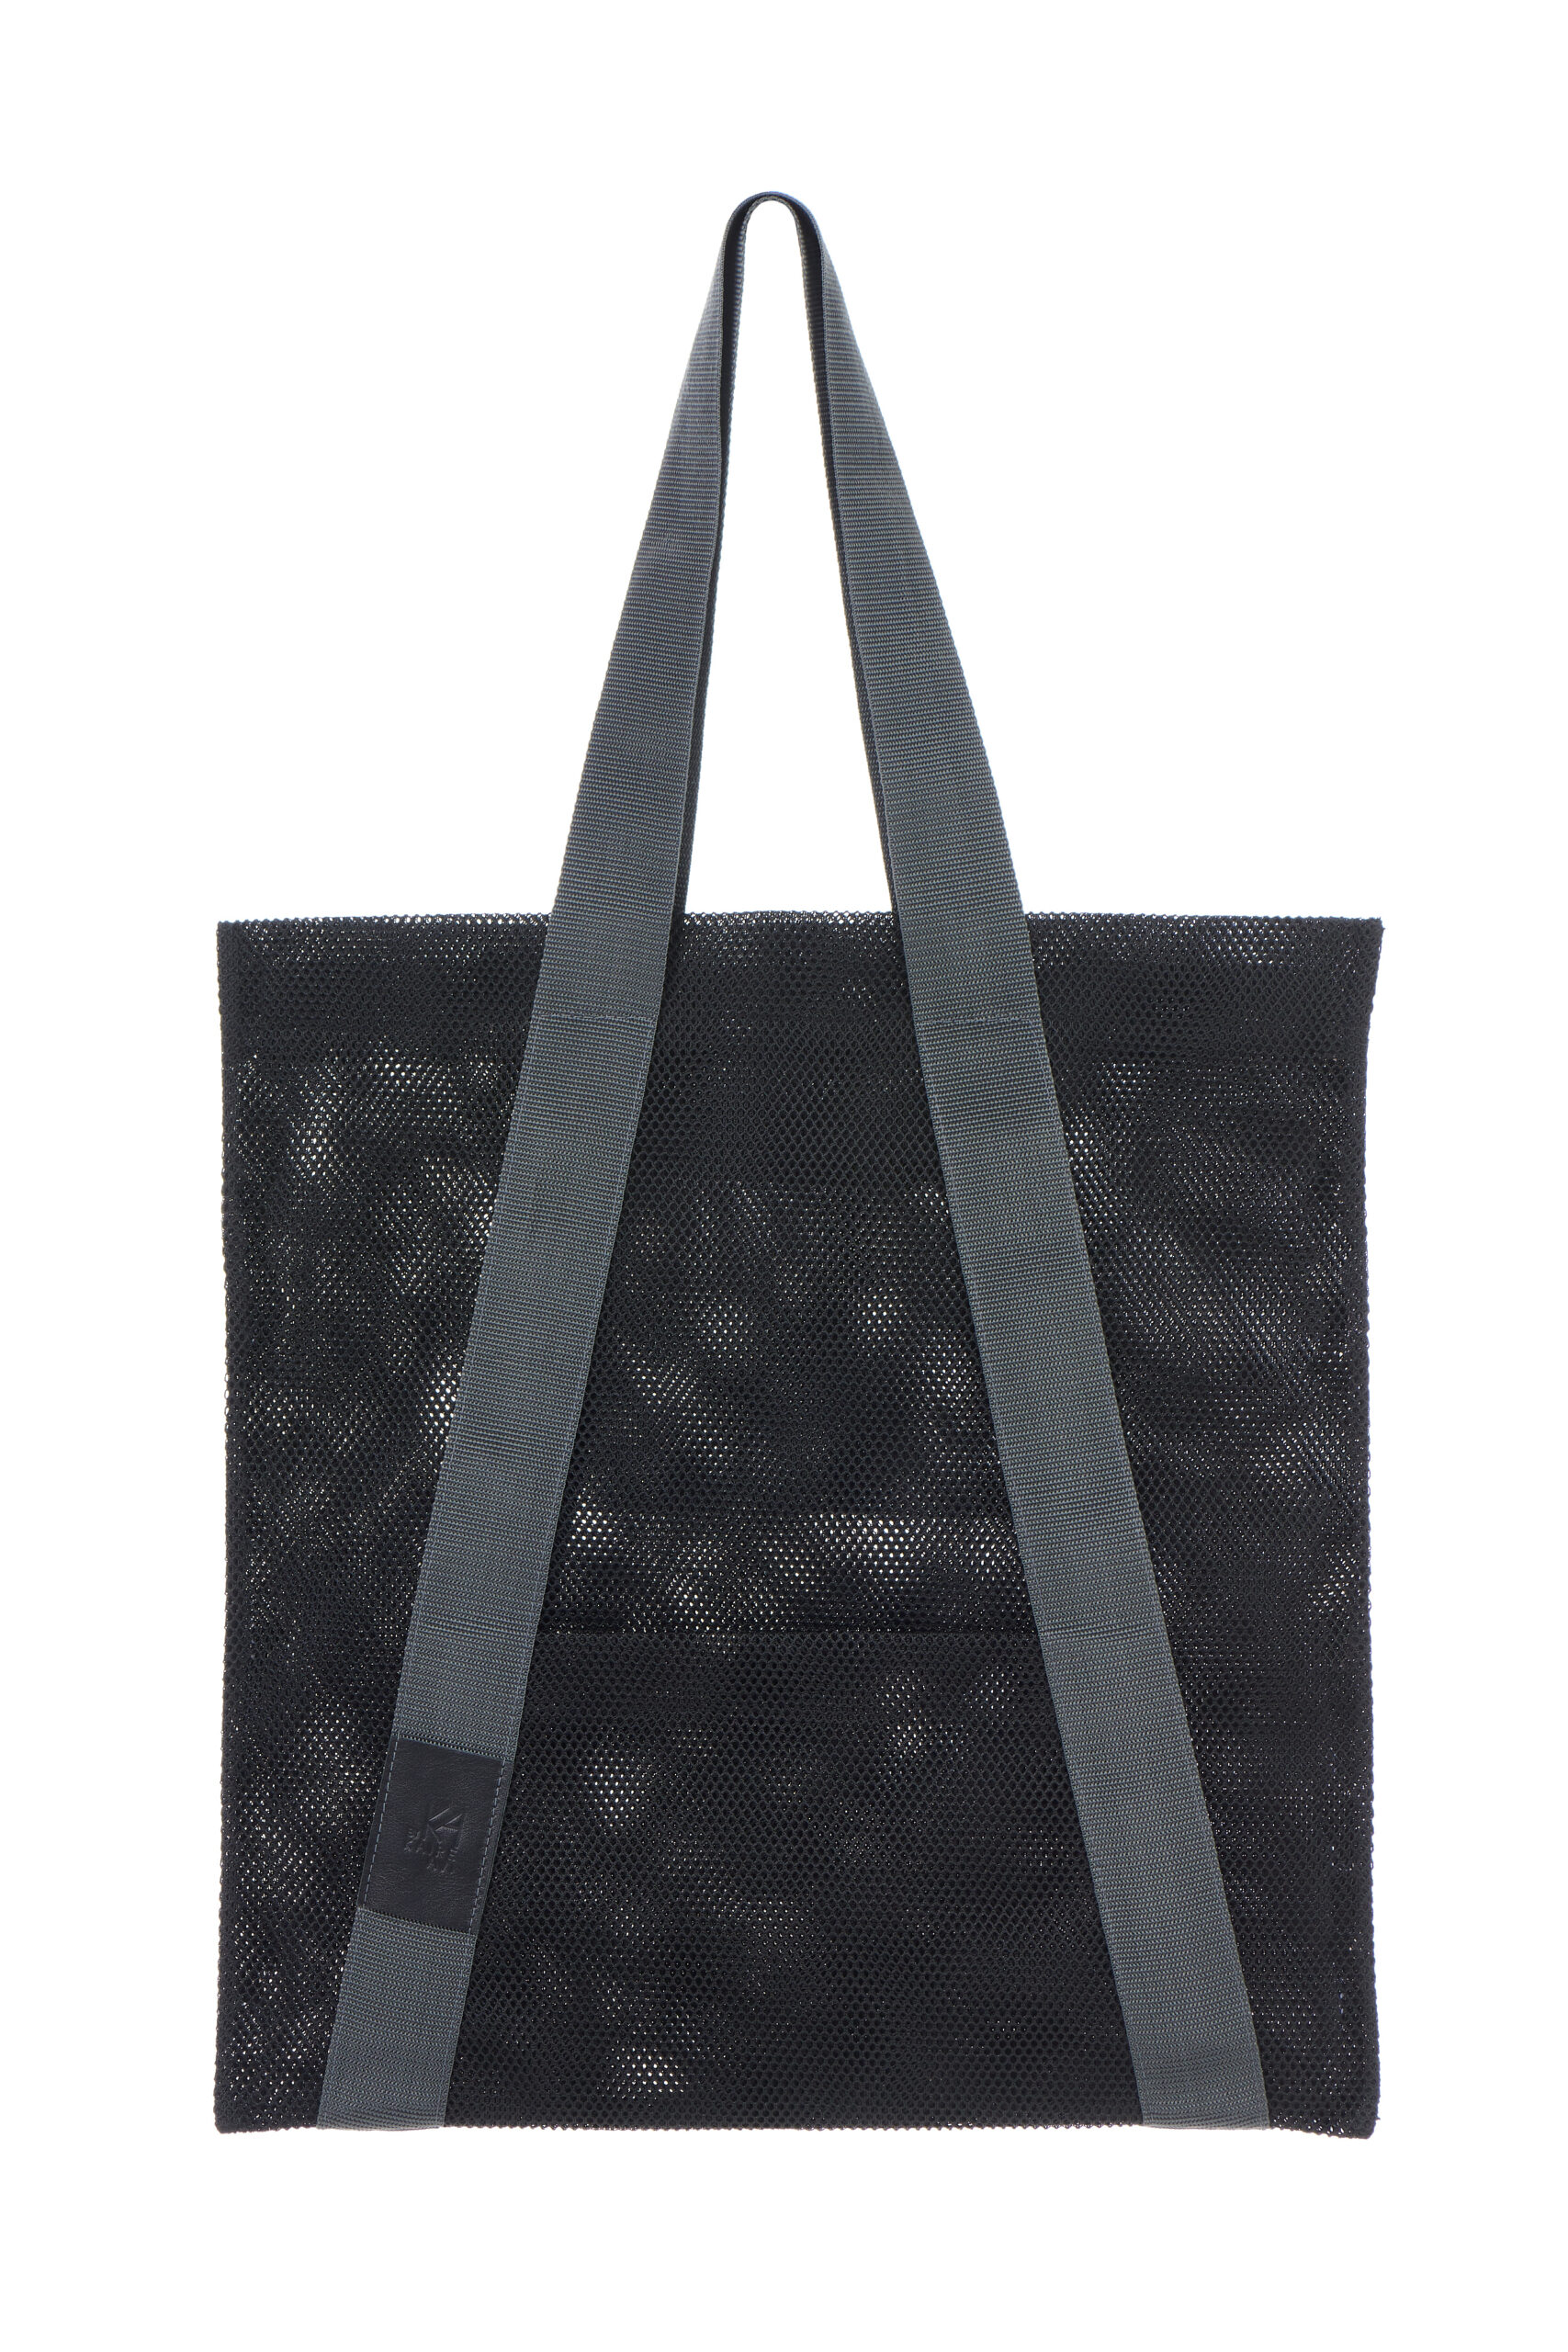 Poekott “Hanna” hall rihm / Tote bag “Hanna” black, grey straps